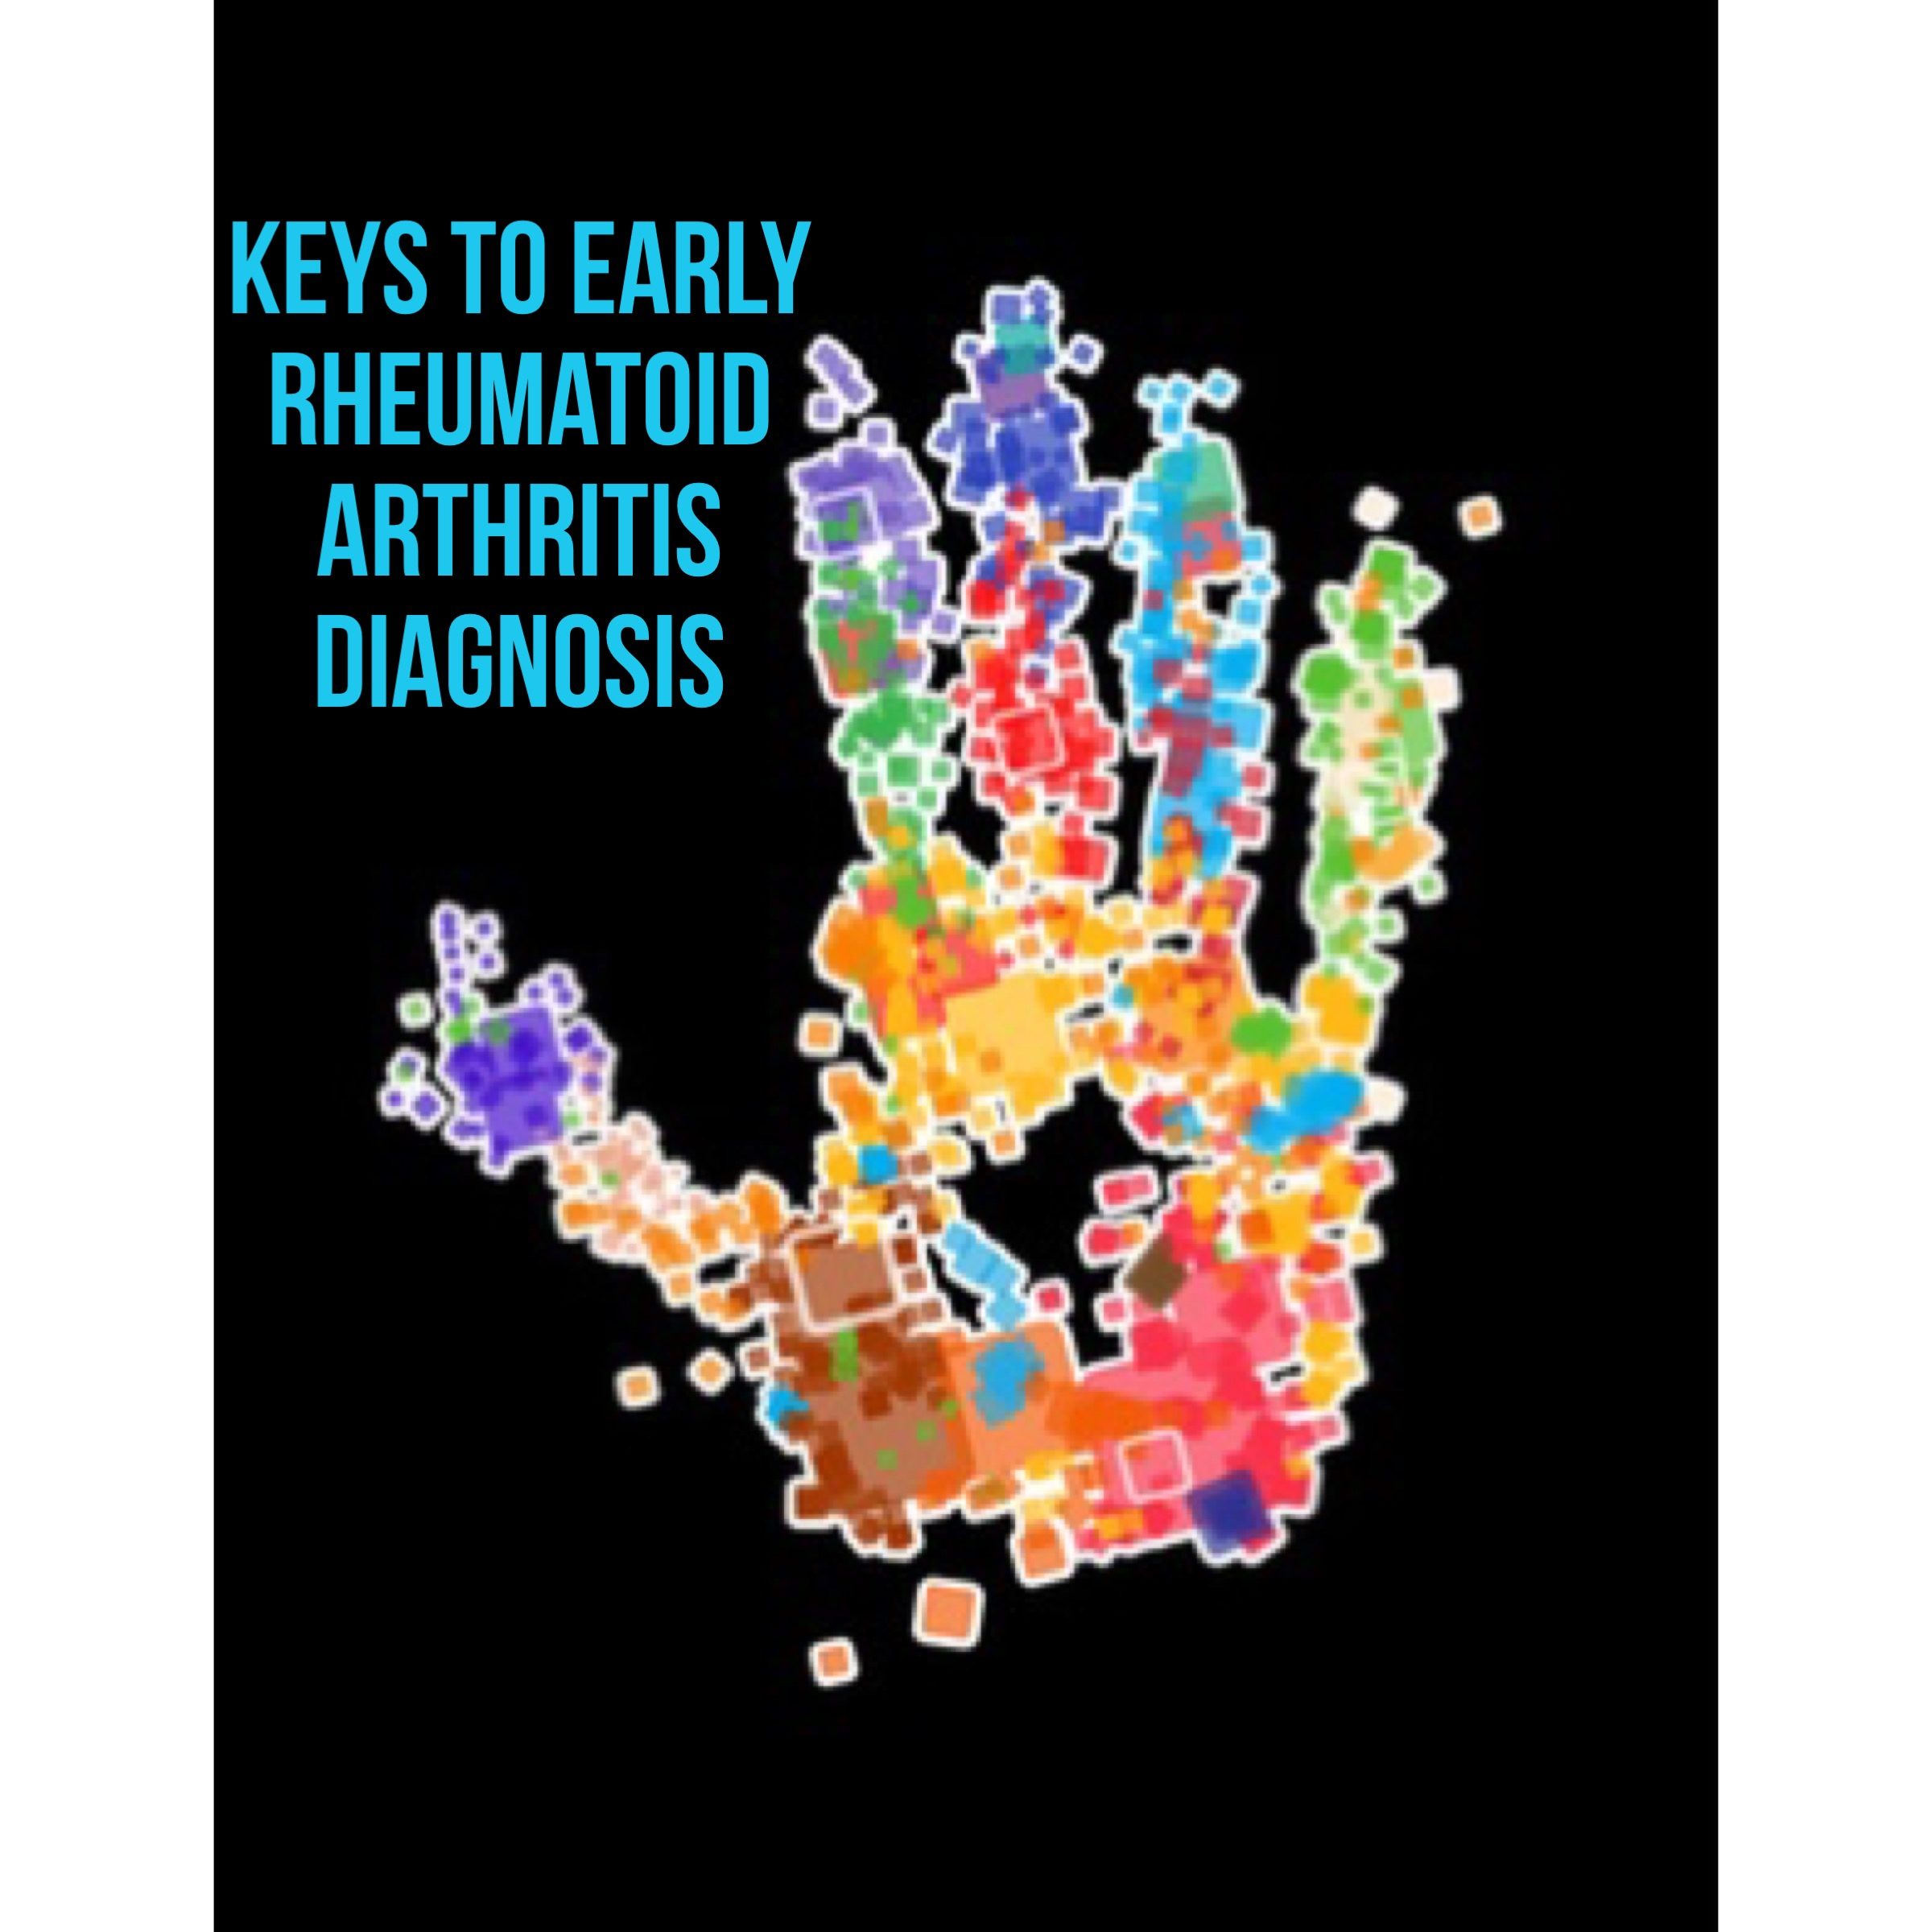 Keys to Early Rheumatoid Arthritis diagnosis